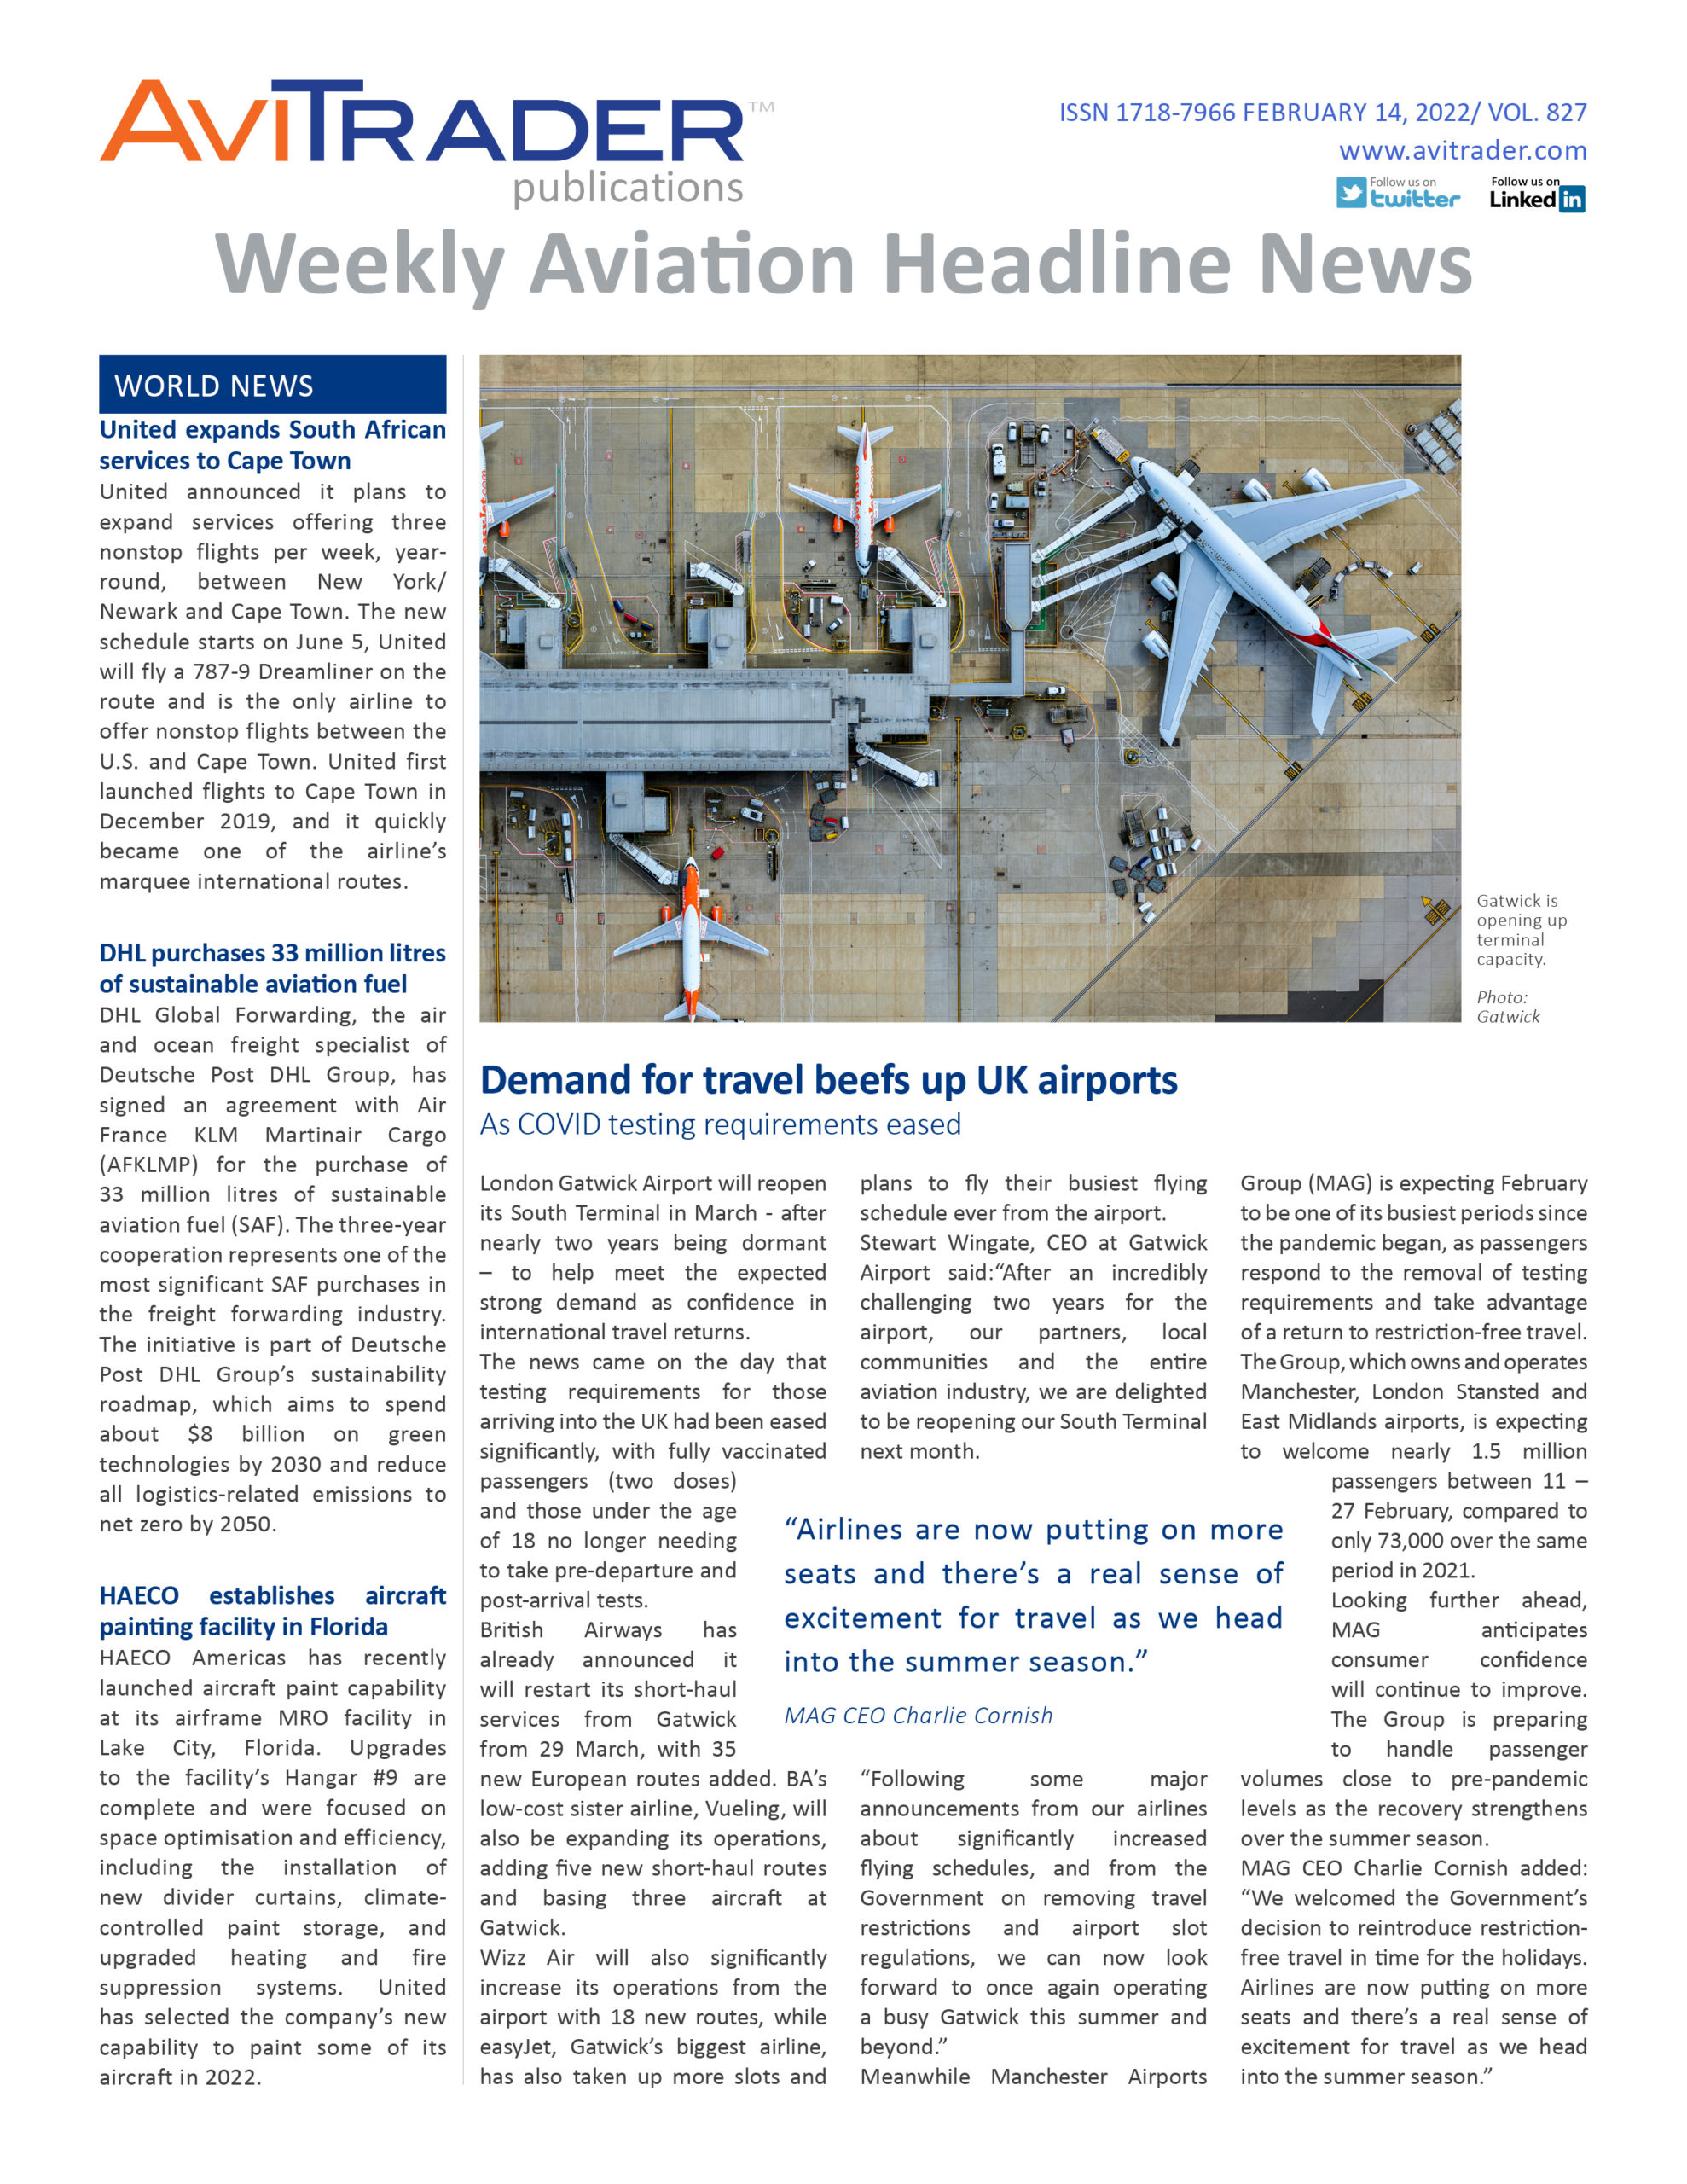 AviTrader_Weekly_Headline_News_Cover_2022-02-14